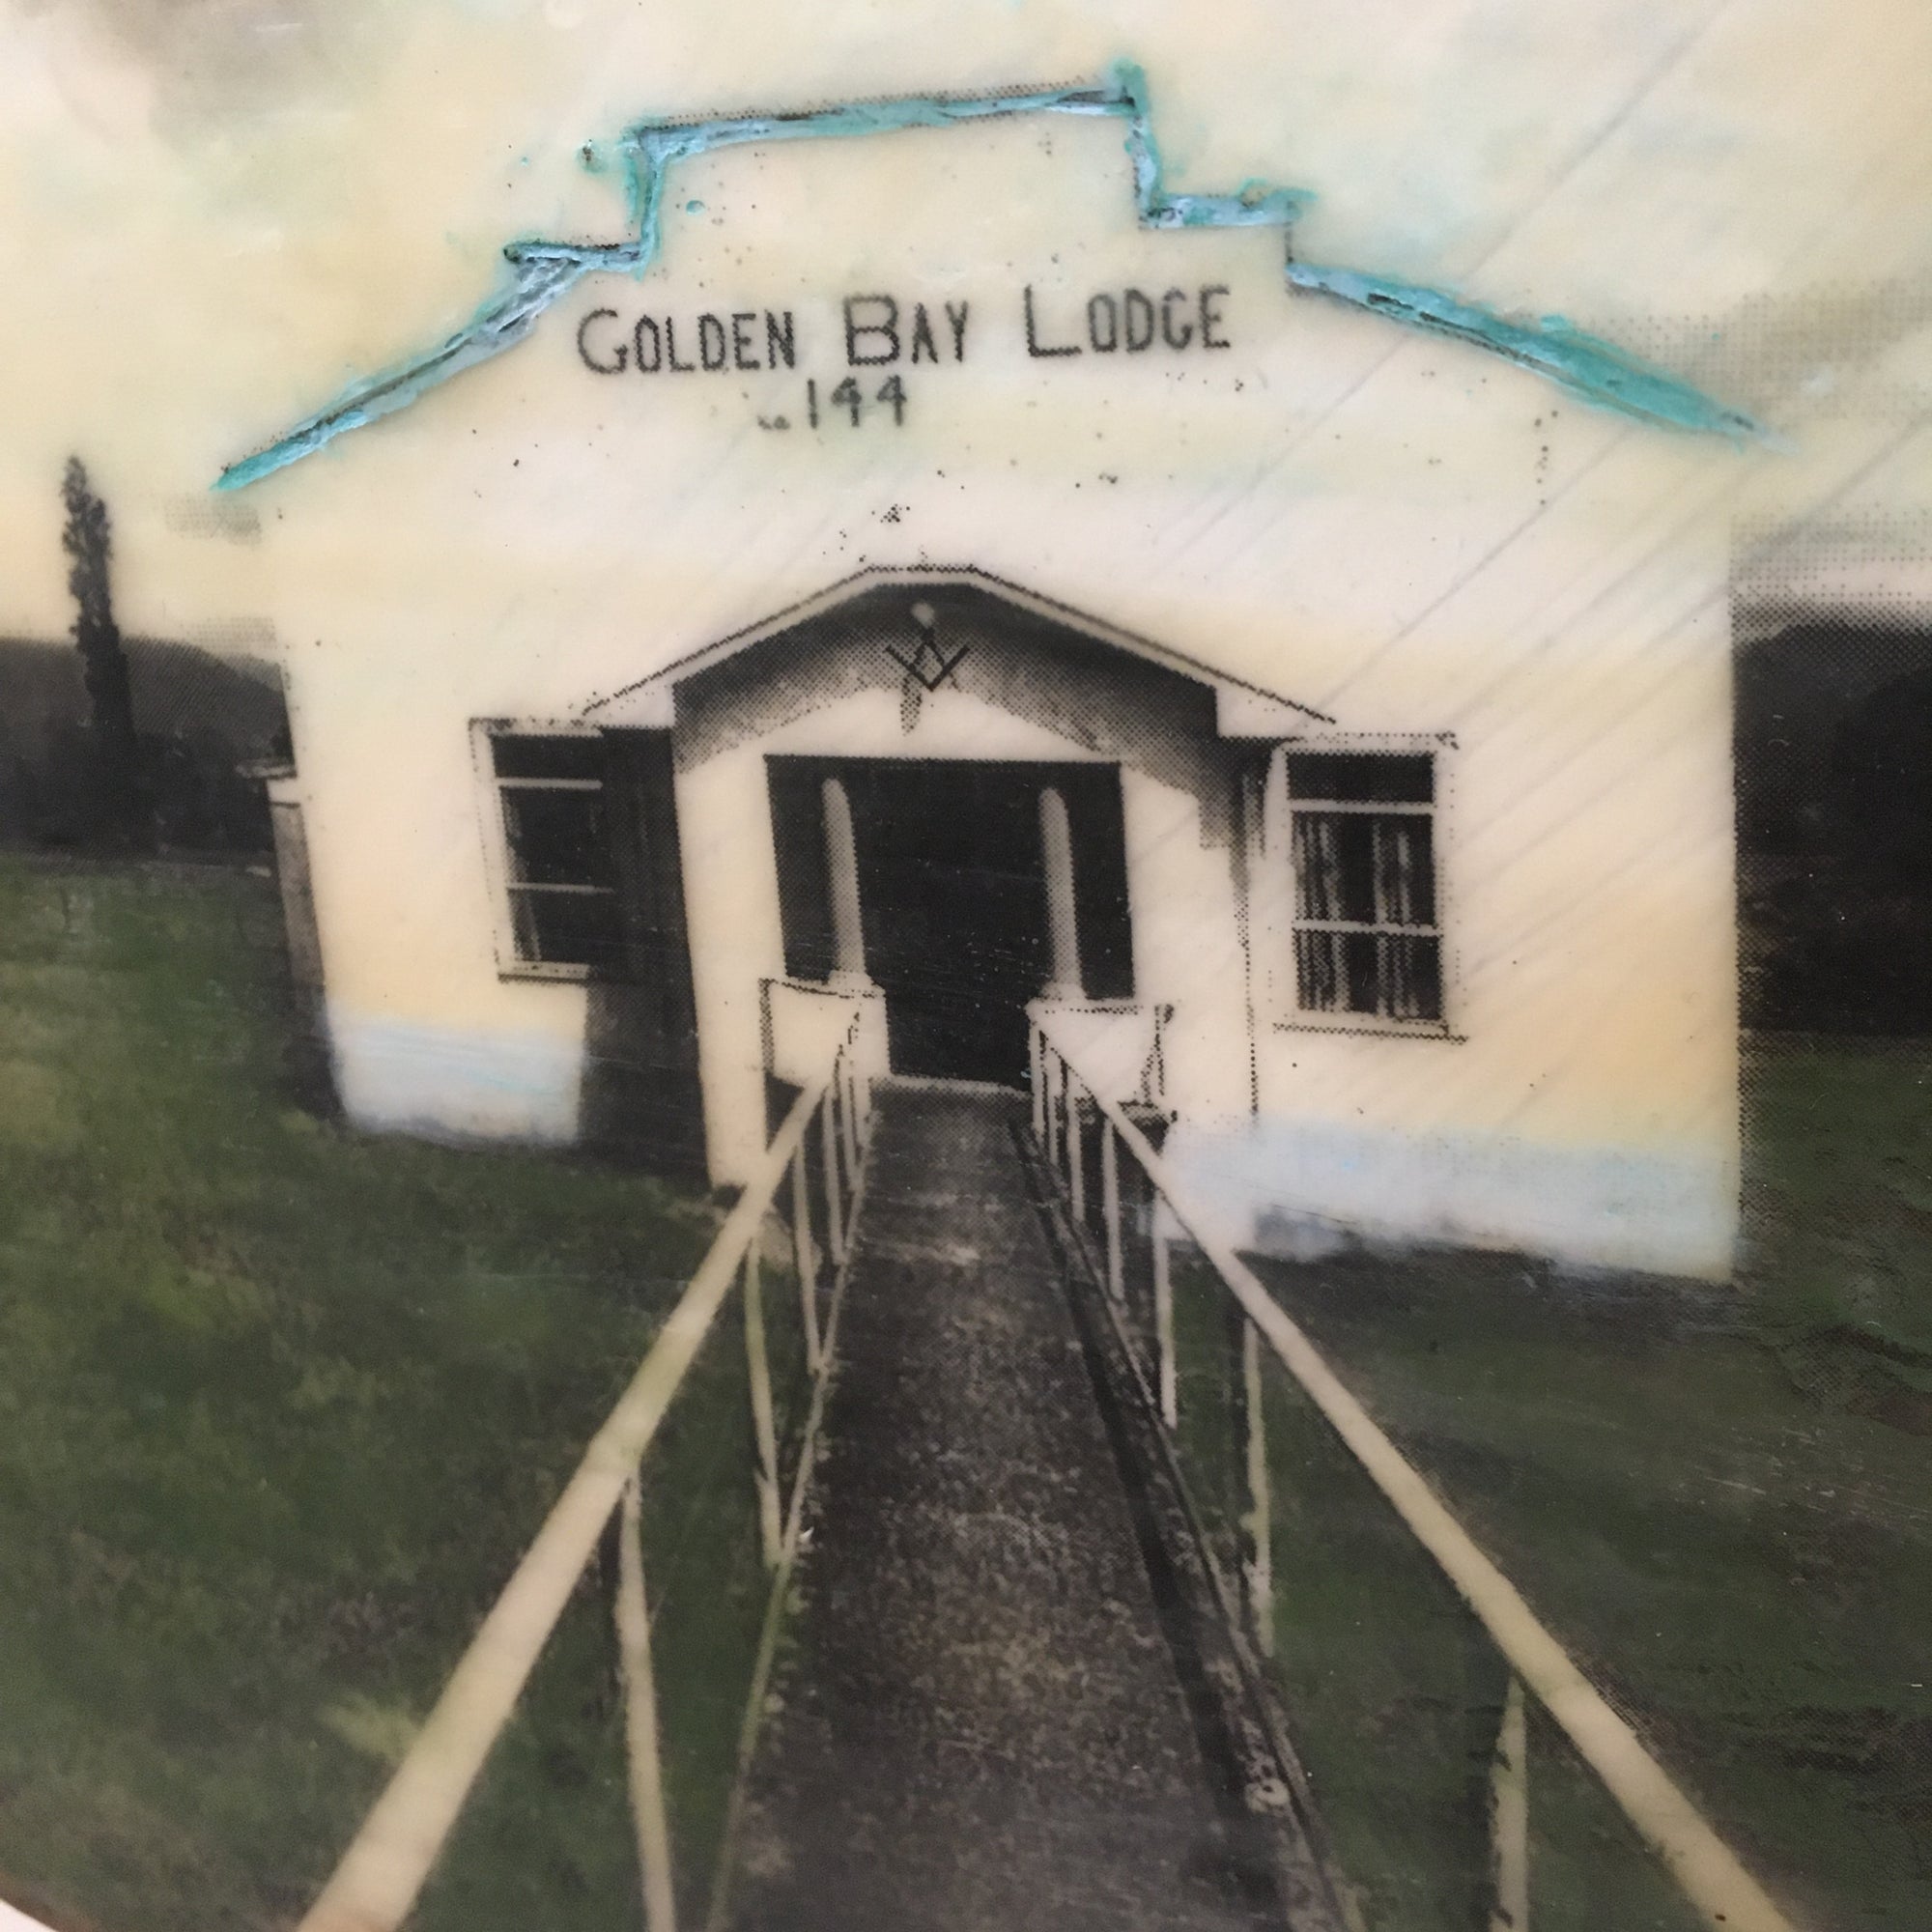 Golden Bay Lodge - The Masons - Encaustic Artwork